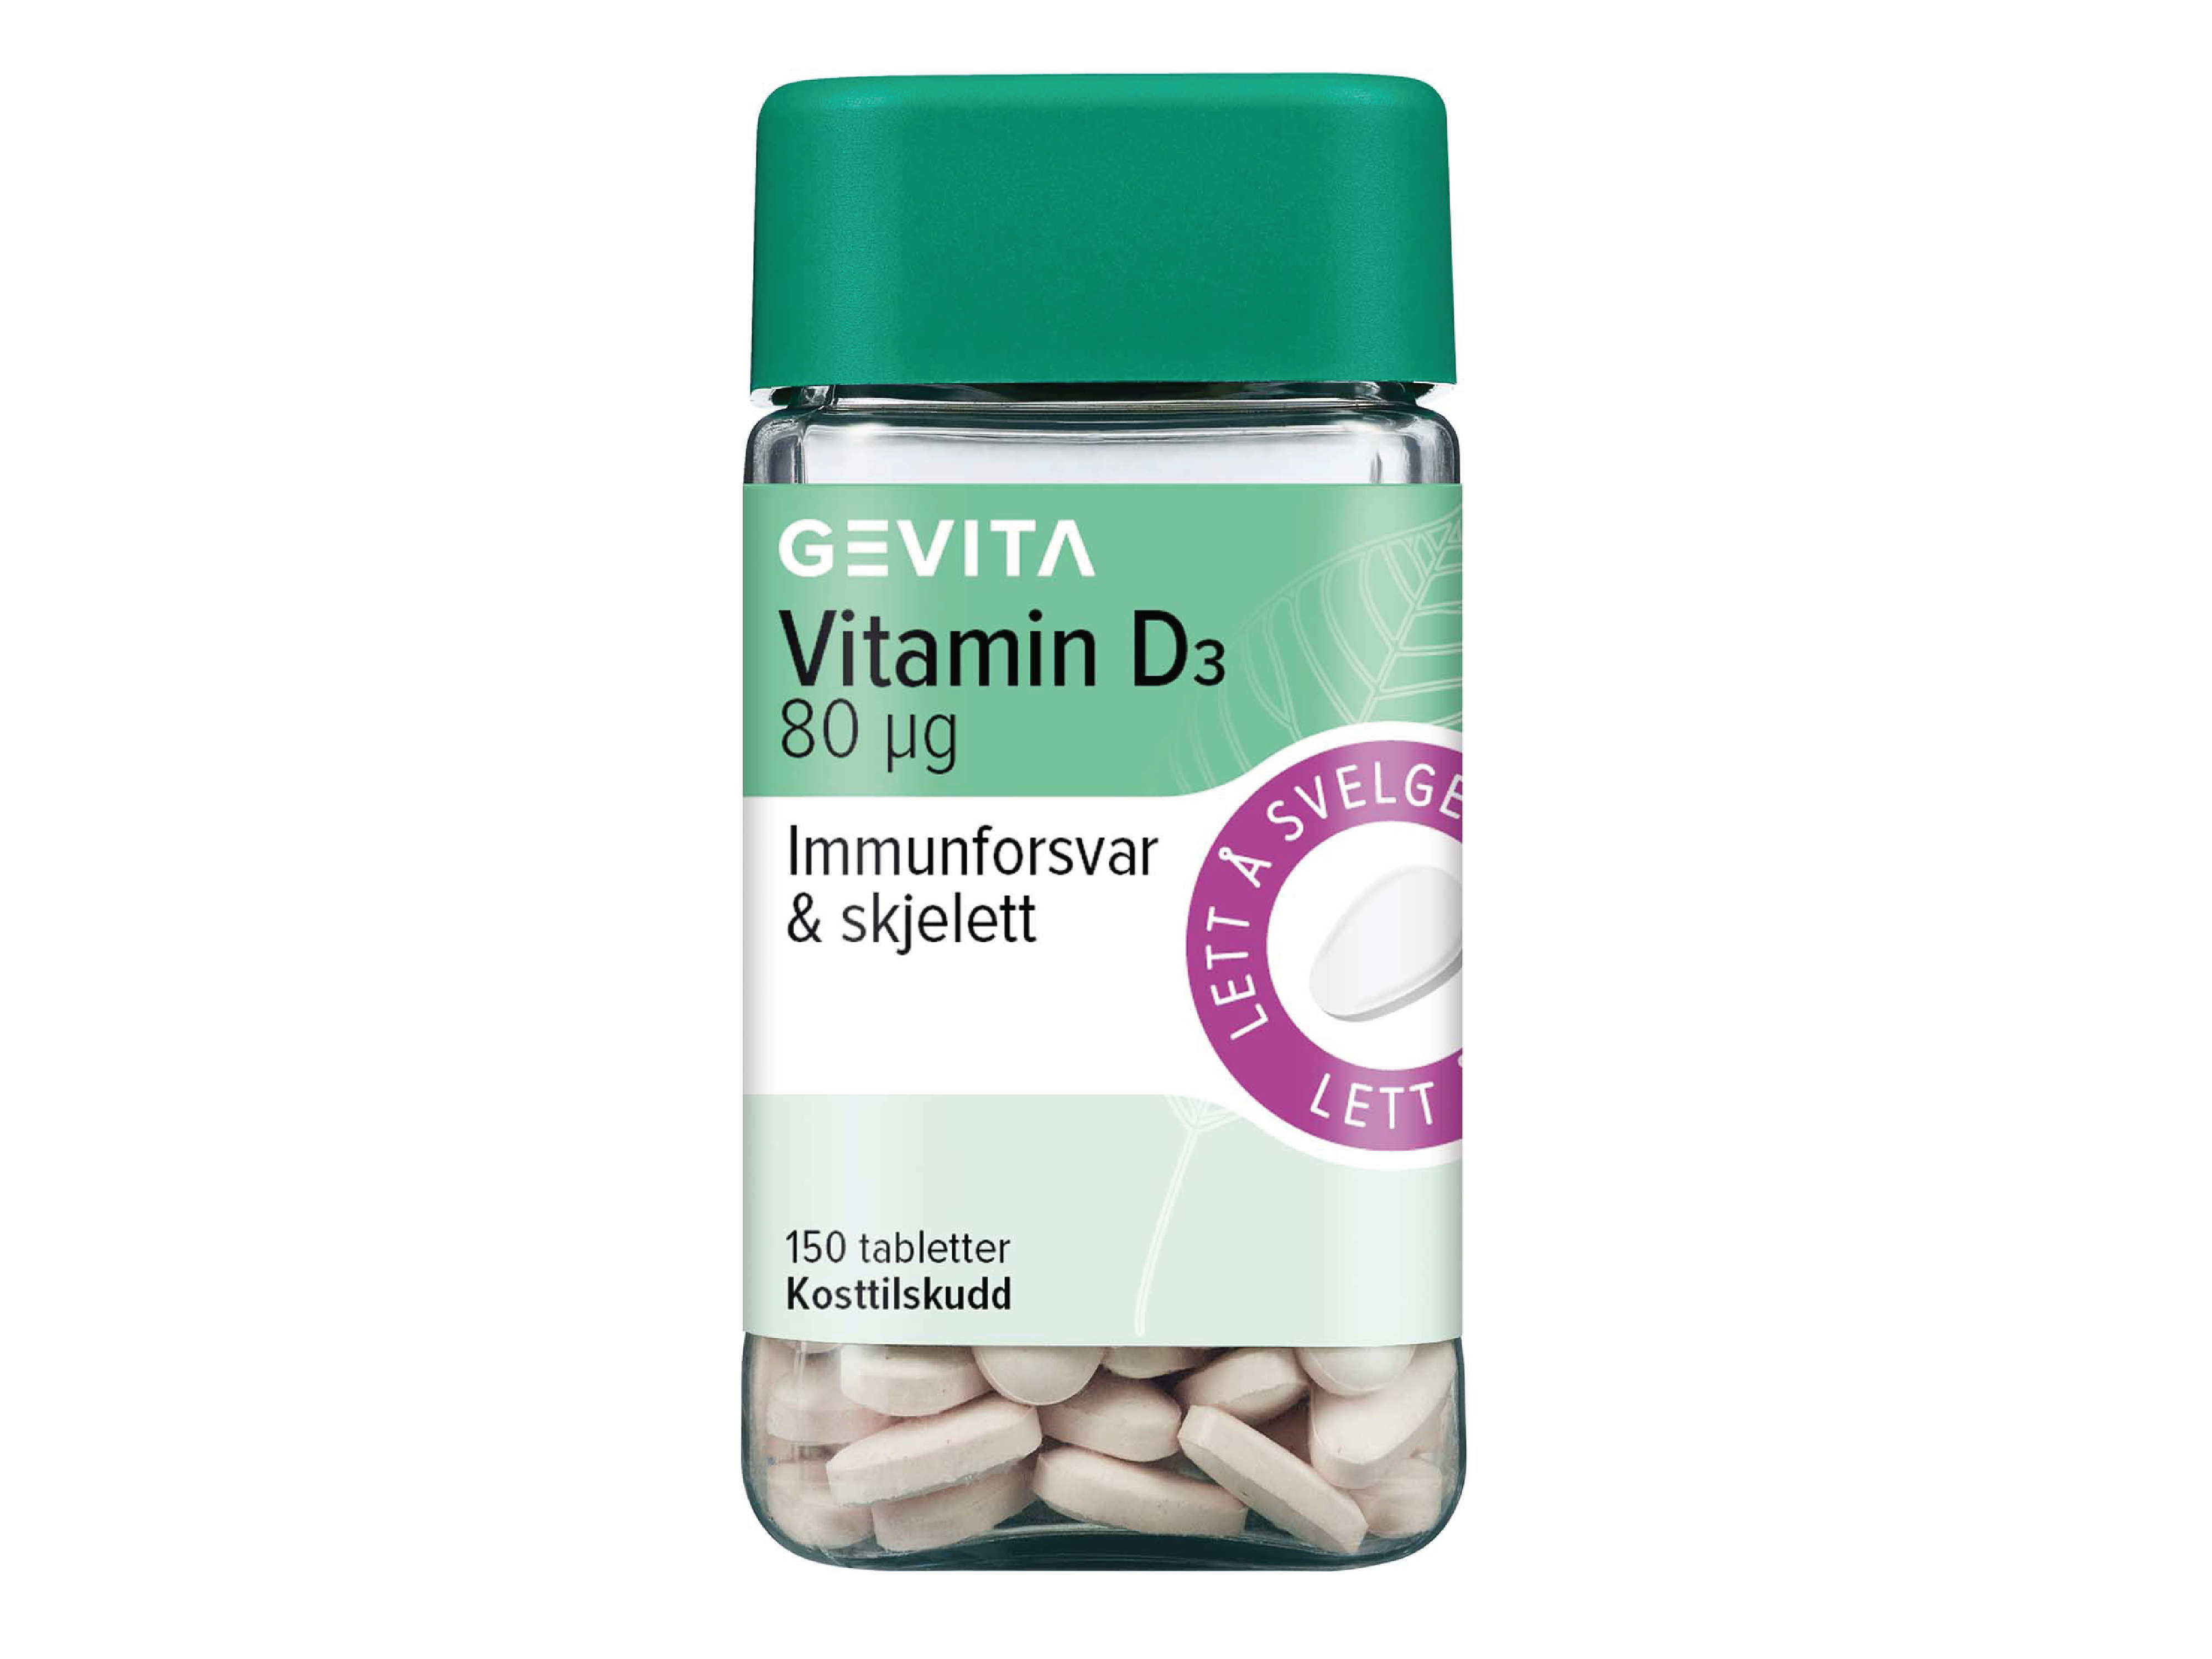 Gevita Vitamin D3 80 µg, 150 tabletter